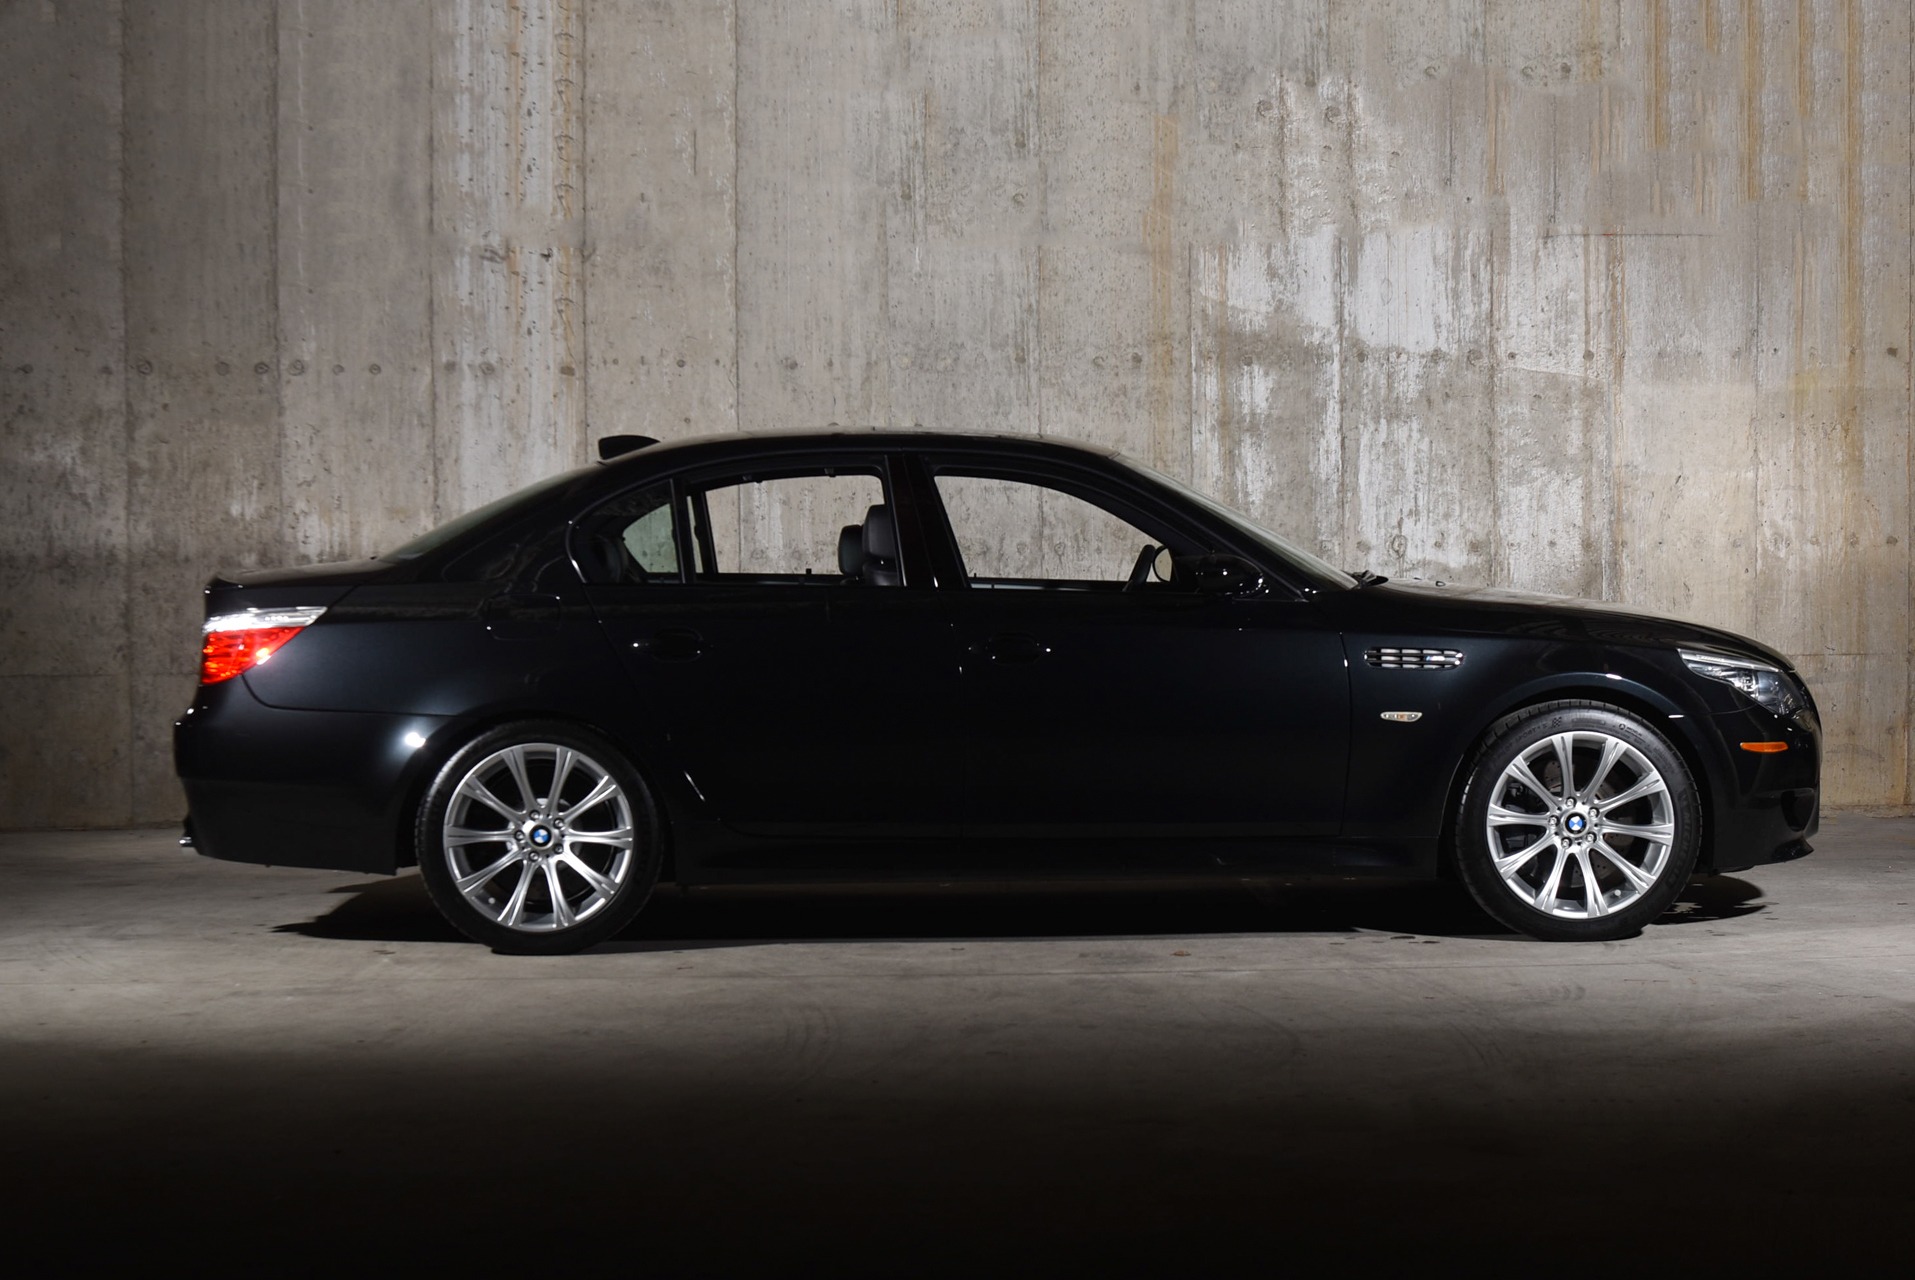 2008 BMW M5 Black / Black 6 Speed, Modded